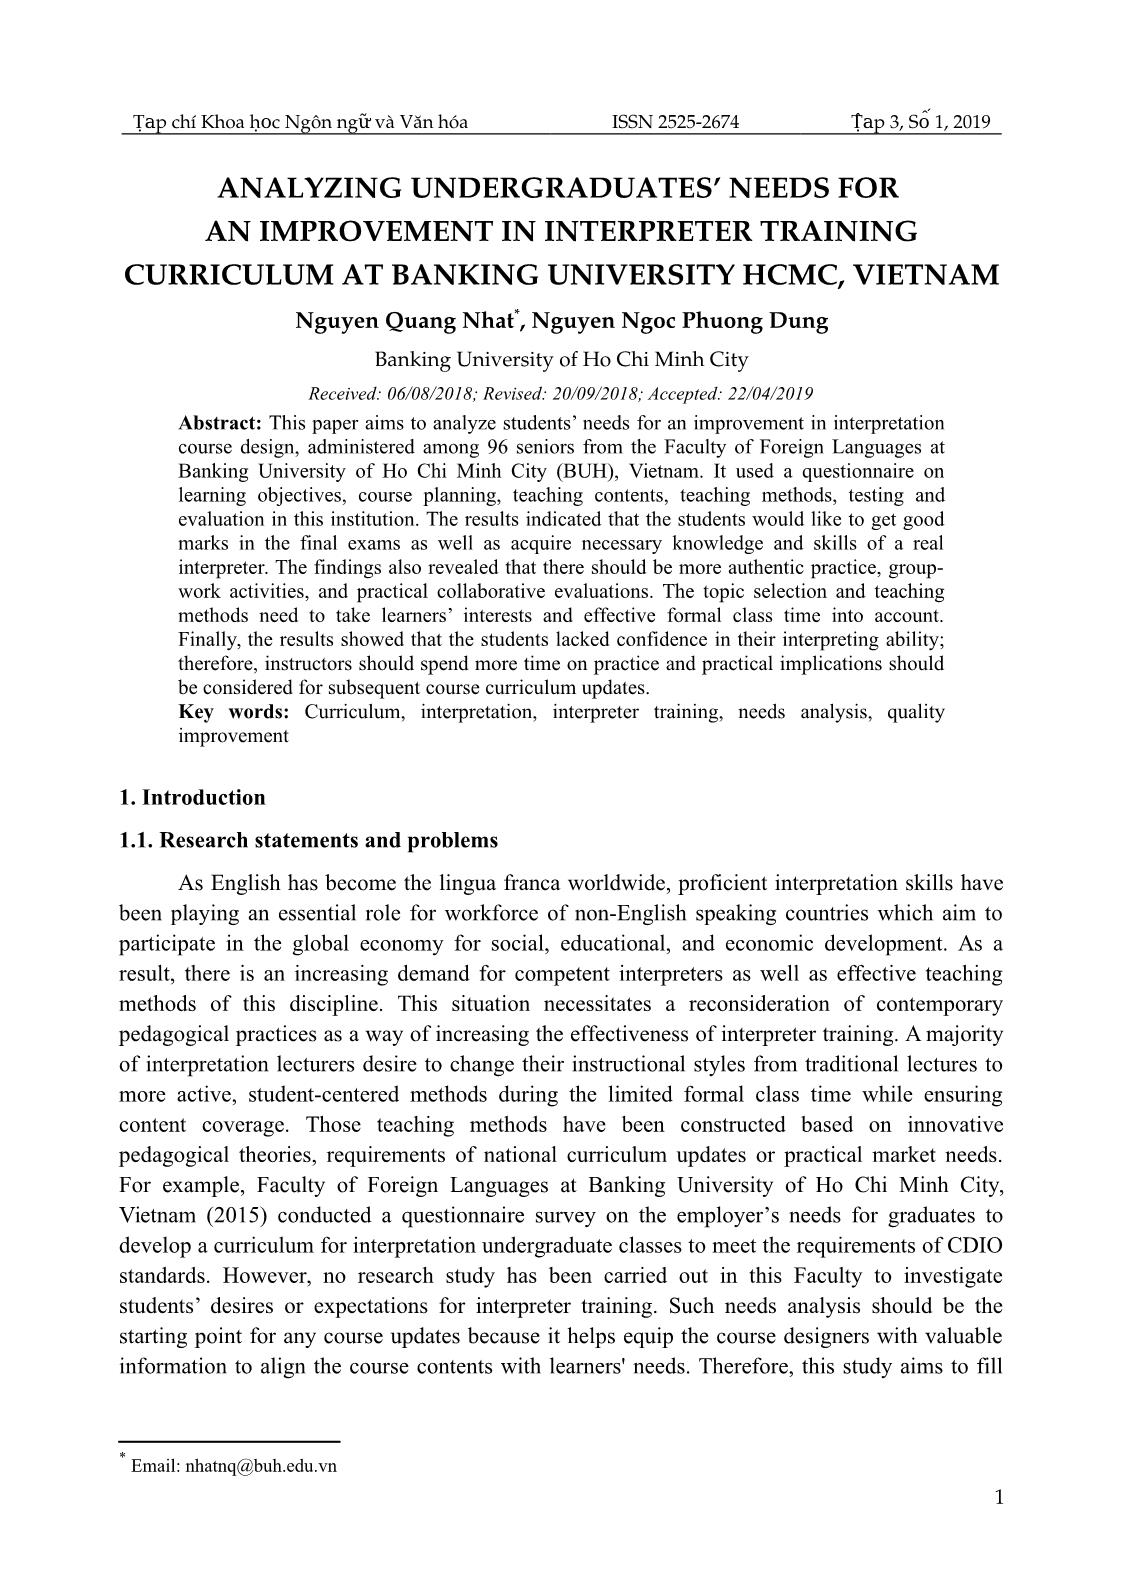 Analyzing undergraduates’ needs for an improvement in interpreter training curriculum at banking university HCMC, Vietnam trang 1